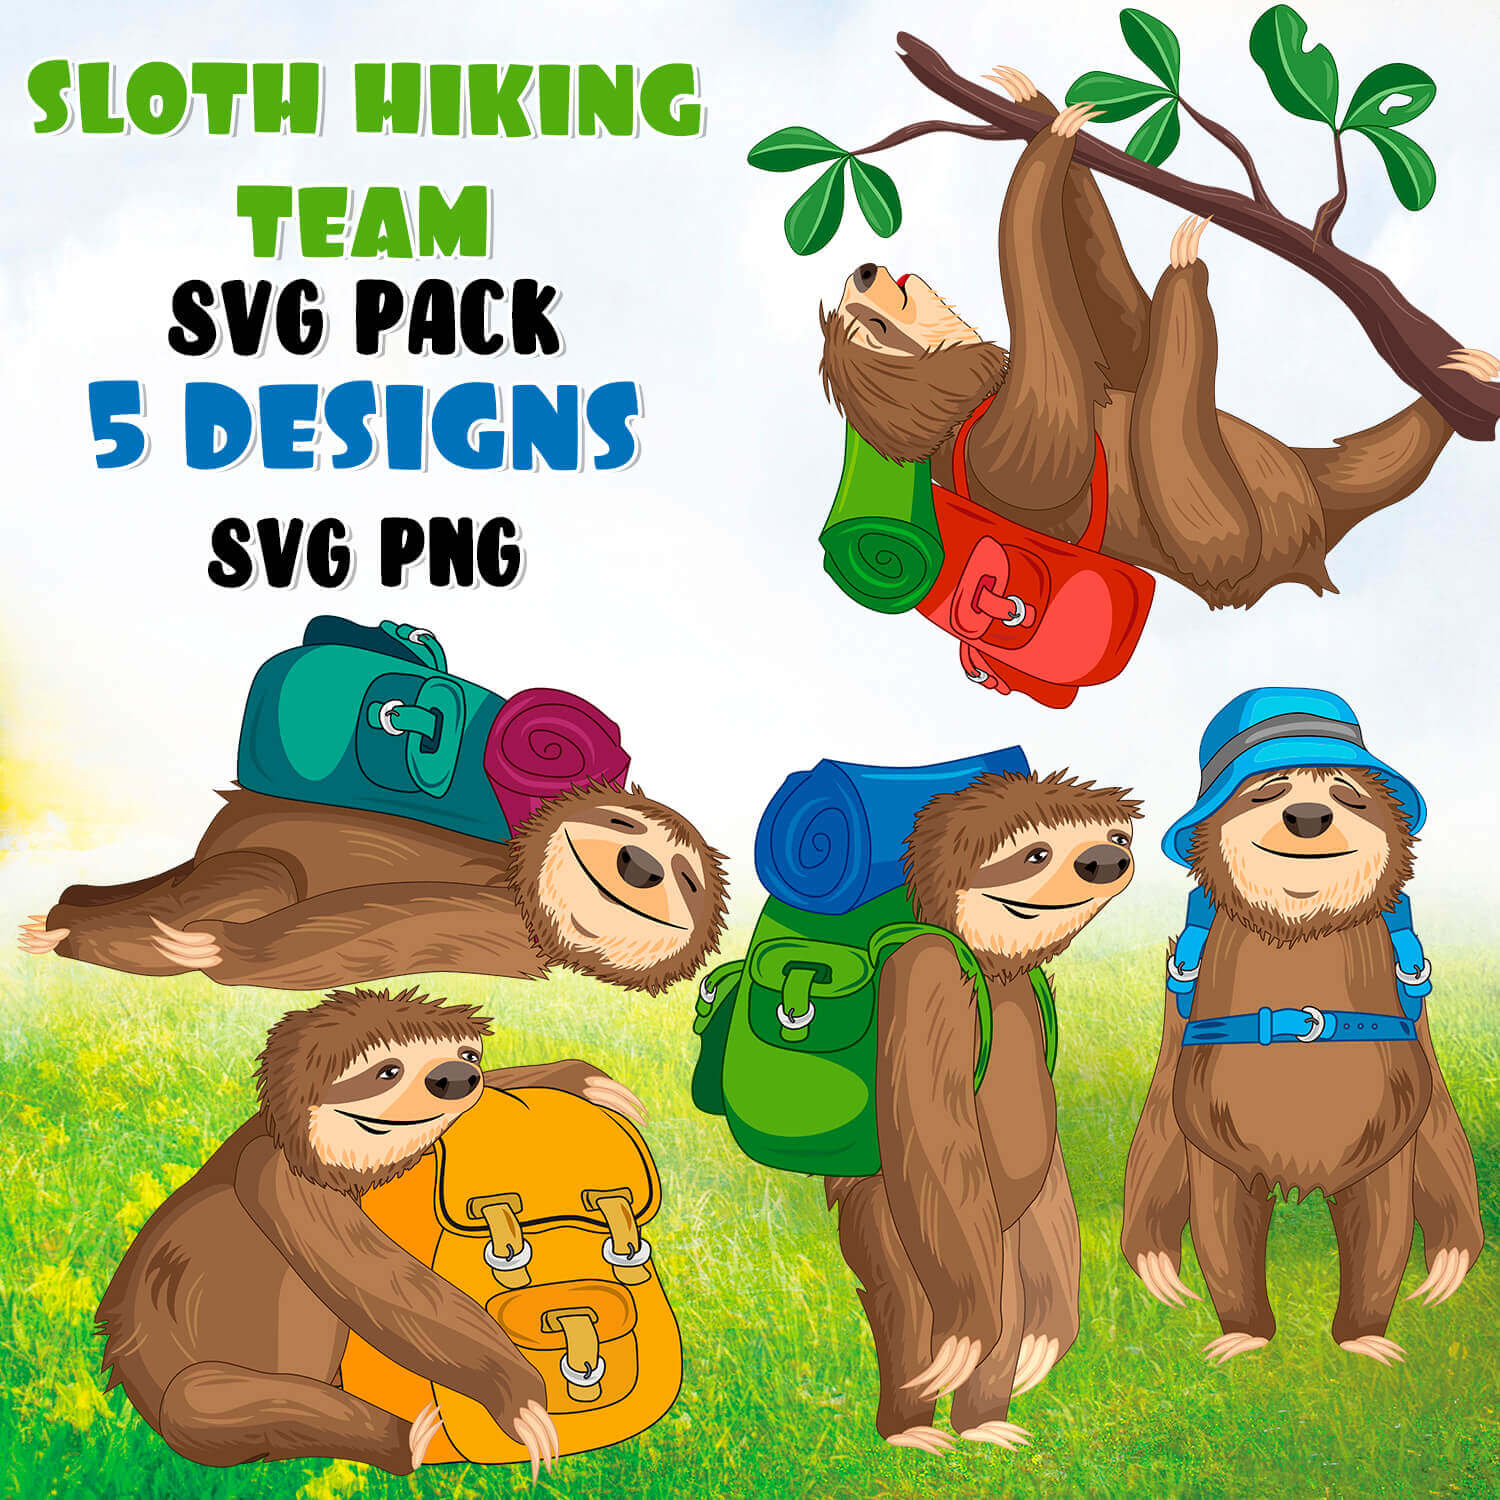 Sloth hiking team svg pack 5 designs.